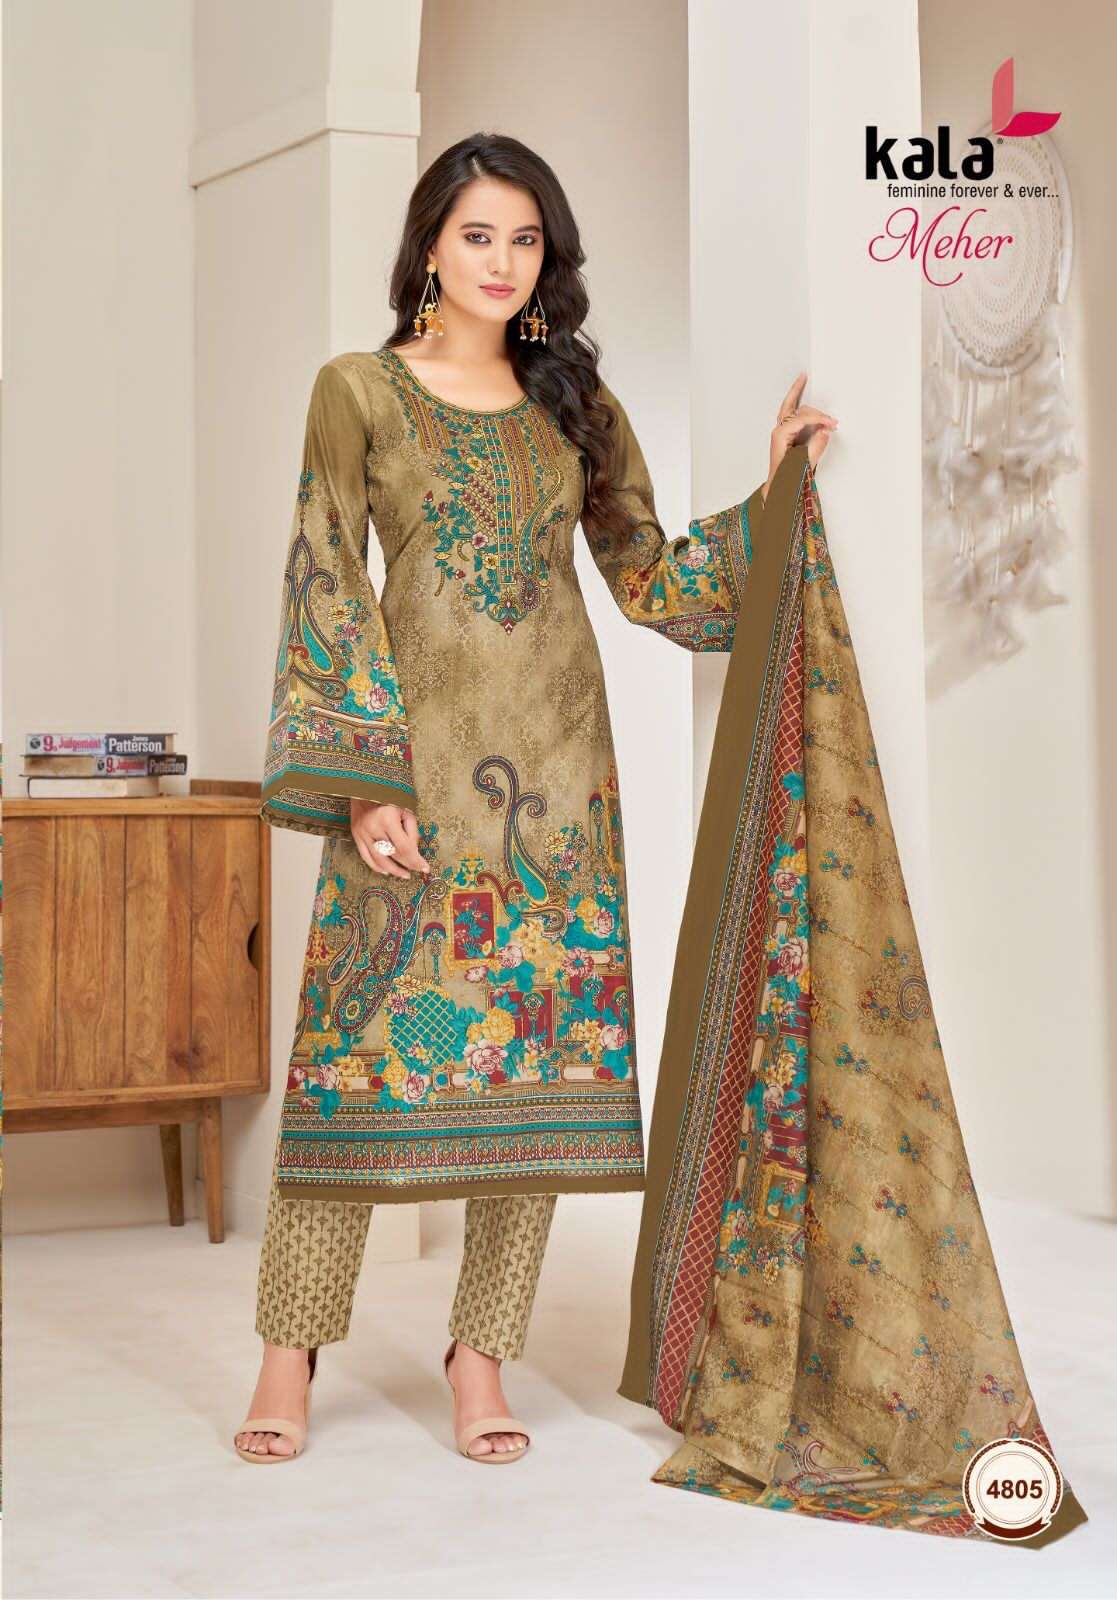 tarika kala meher vol-9 4801-4812 series designer wedding wear salwar kameez wholesaler surat gujarat